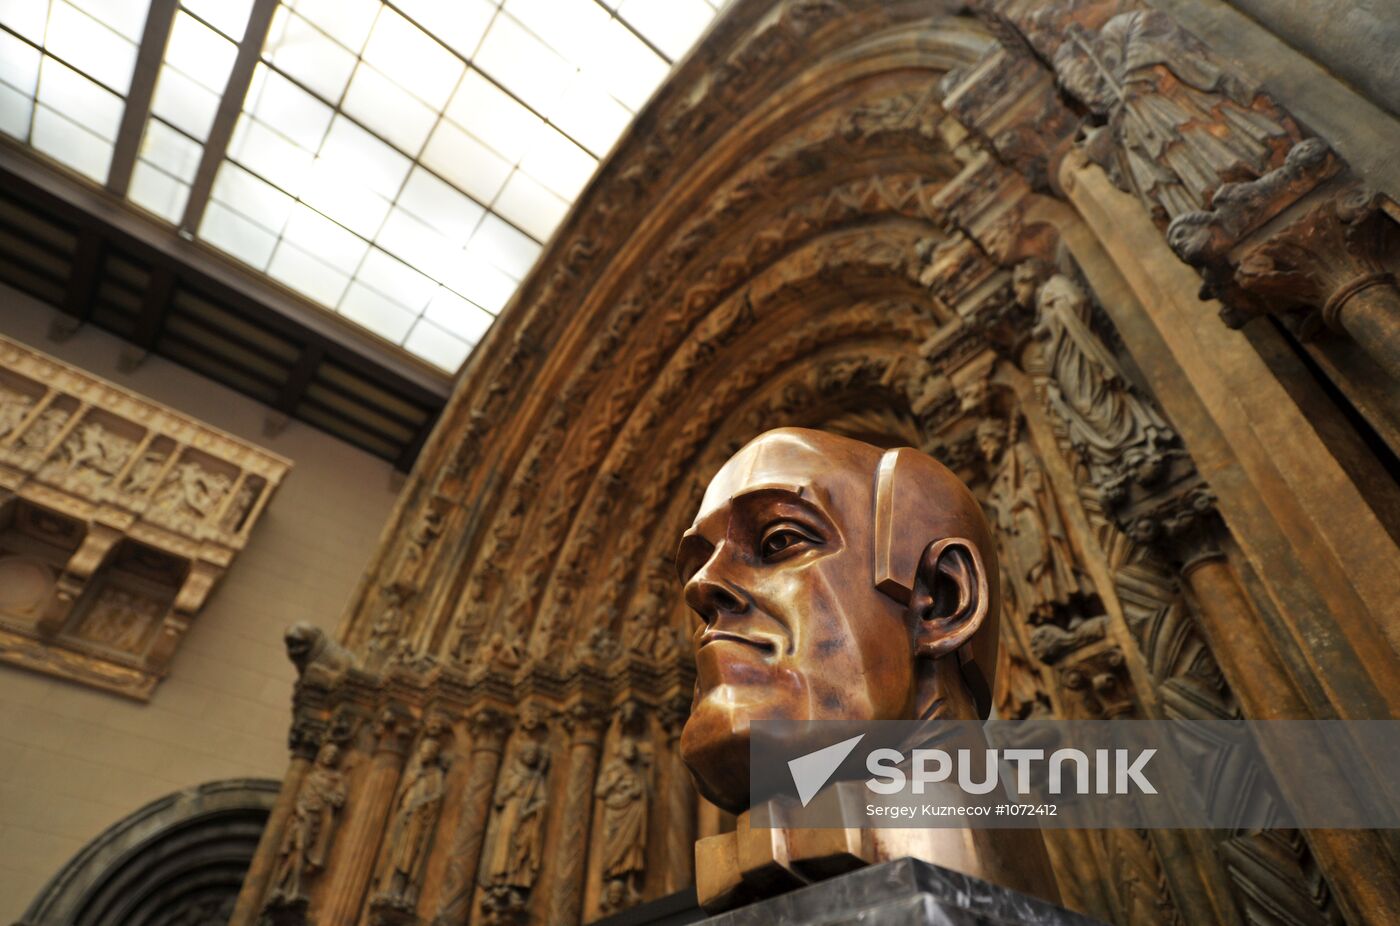 Unveiling sculptural bust of Svyatoslav Richter